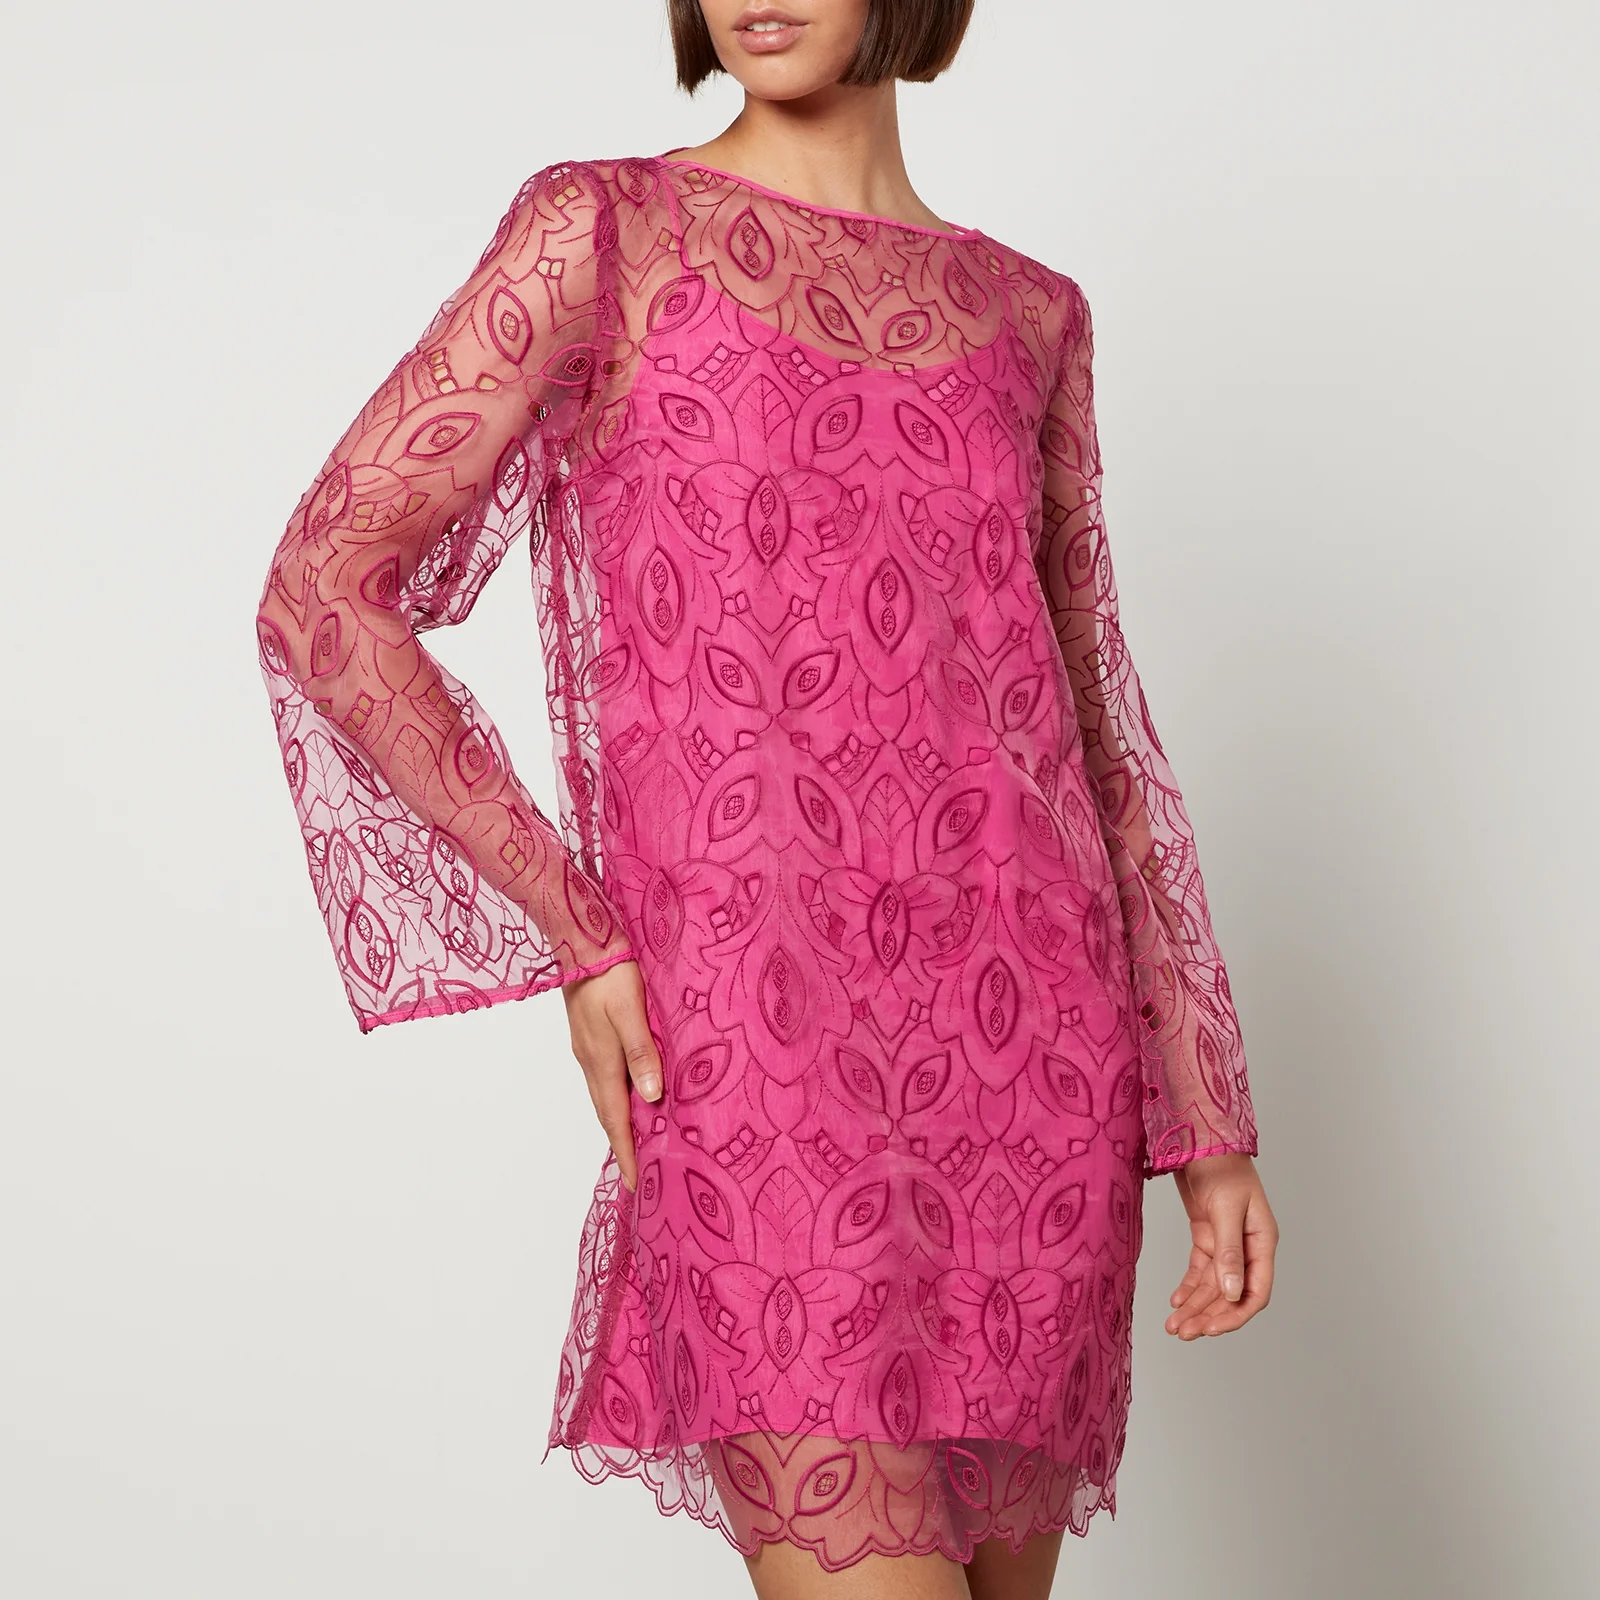 Max Mara Studio Bracco Petticoat Embroidered Tulle Dress Image 1